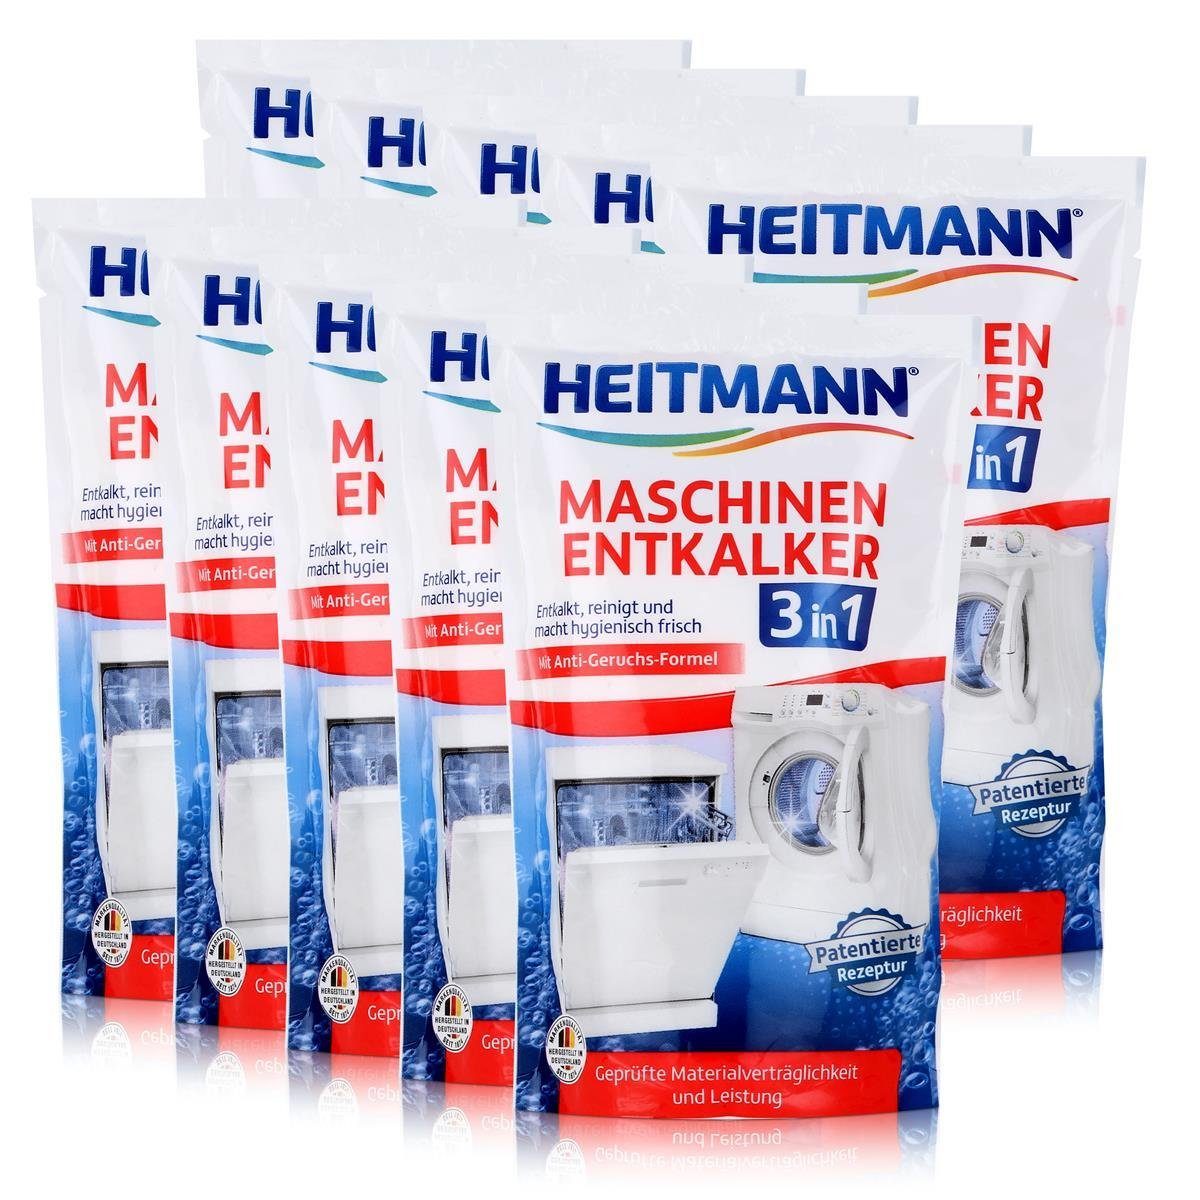 Heitmann -Waschmaschinen Entkalker und (Spezialwaschmittel Maschinen 175g HEITMANN Geschirrspüler